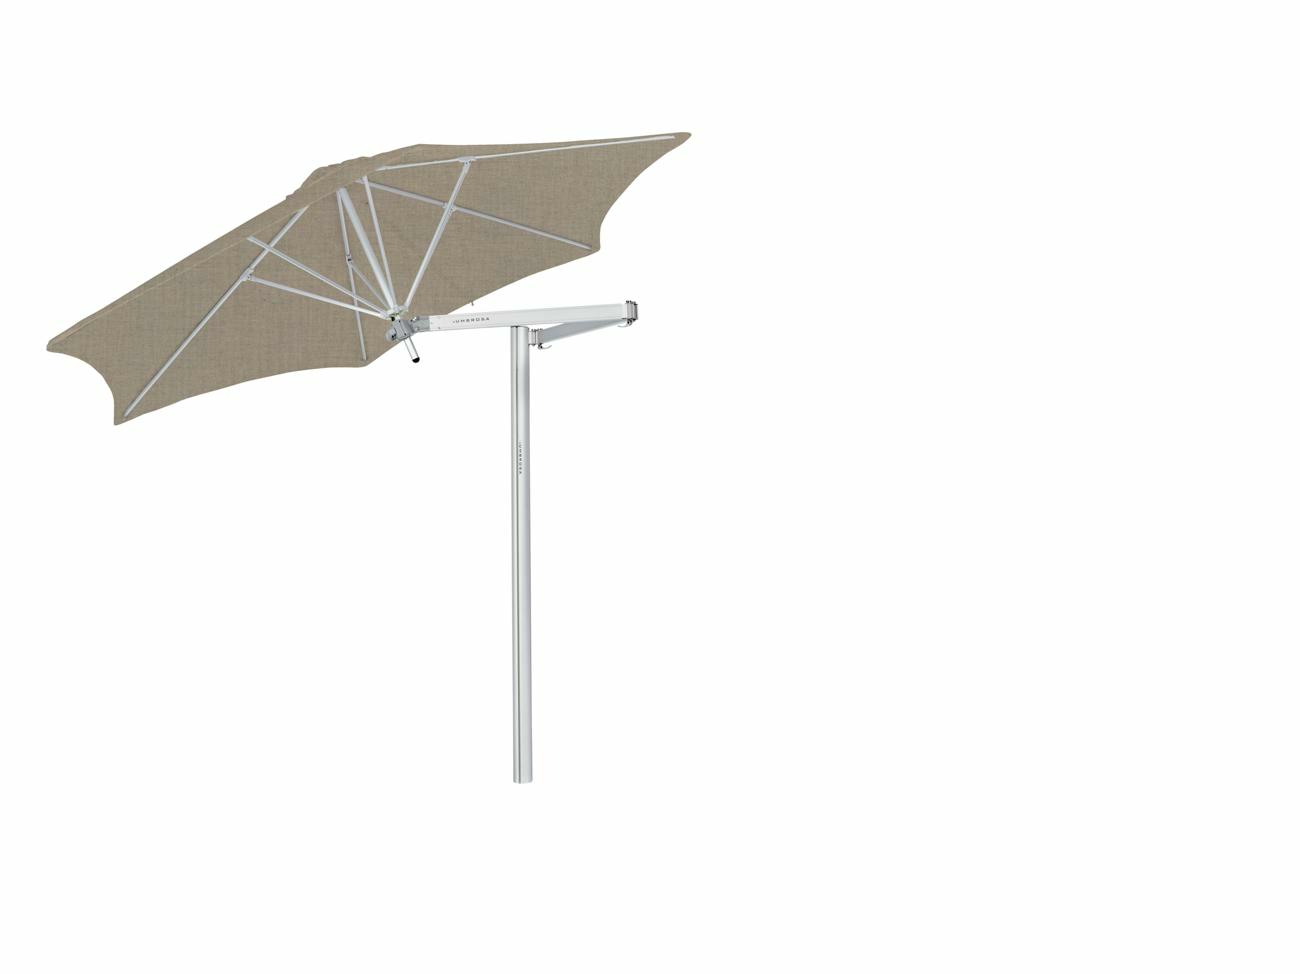 Paraflex cantilever umbrella round 2,7 m with Sand fabric and a Classic arm